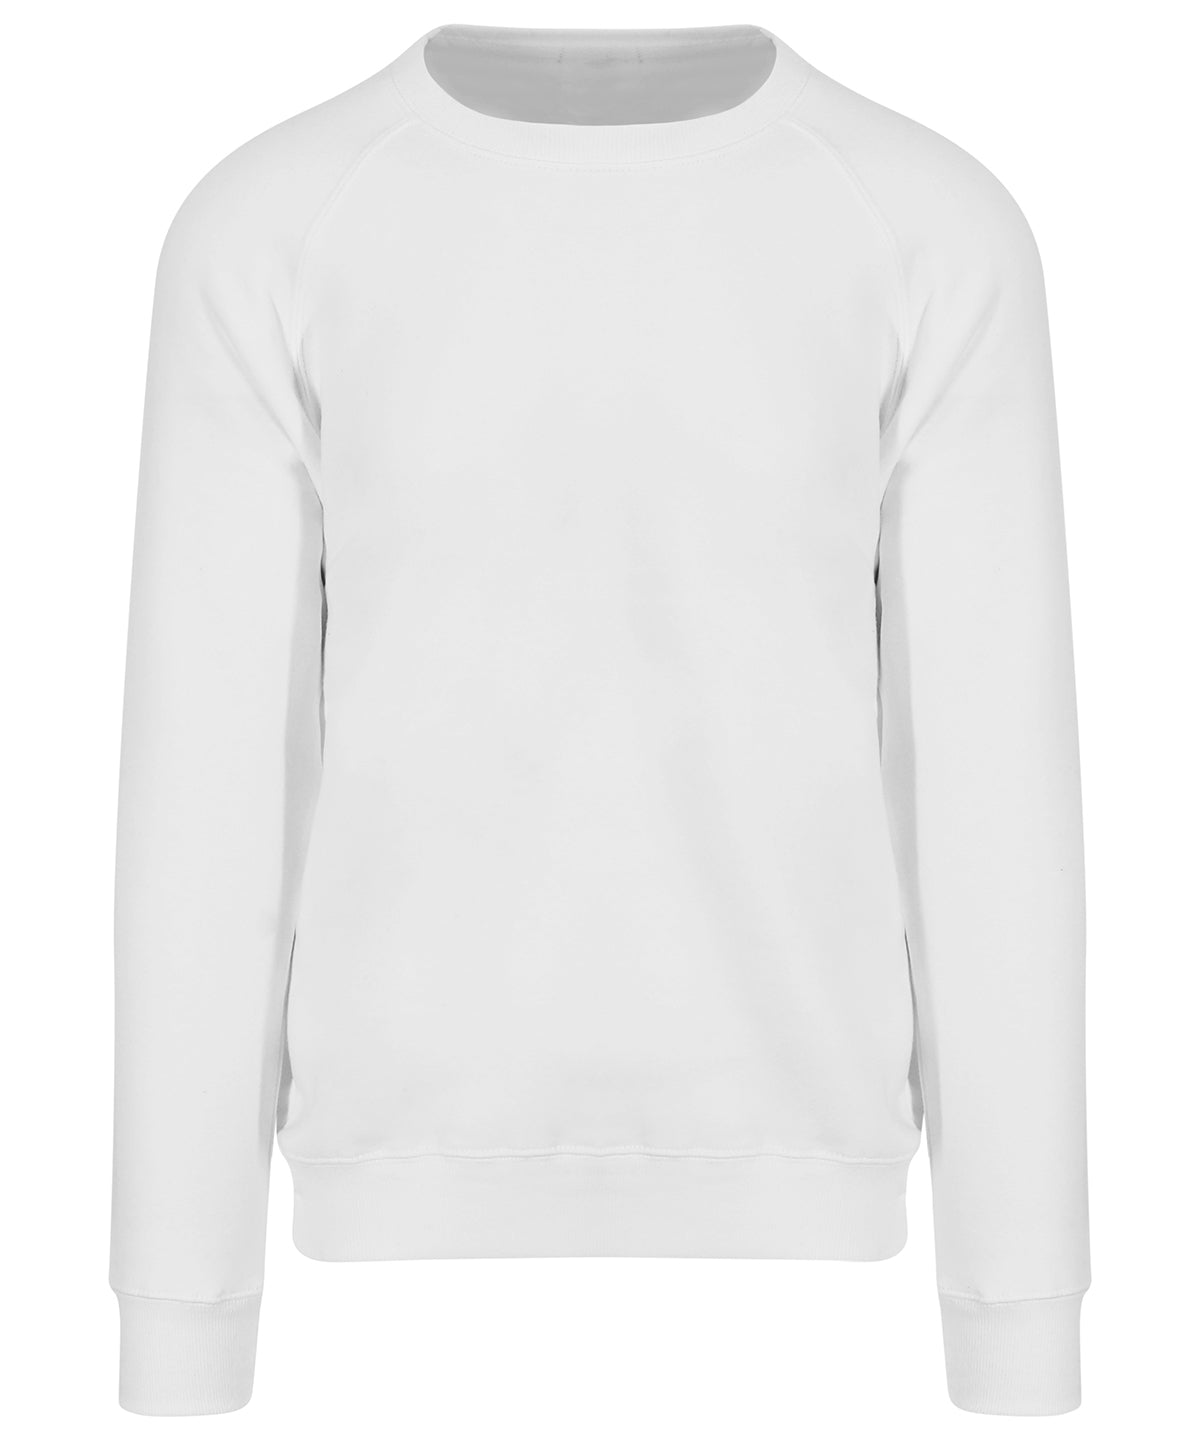 Personalised Sweatshirts - White AWDis Just Hoods Graduate heavyweight sweatshirt